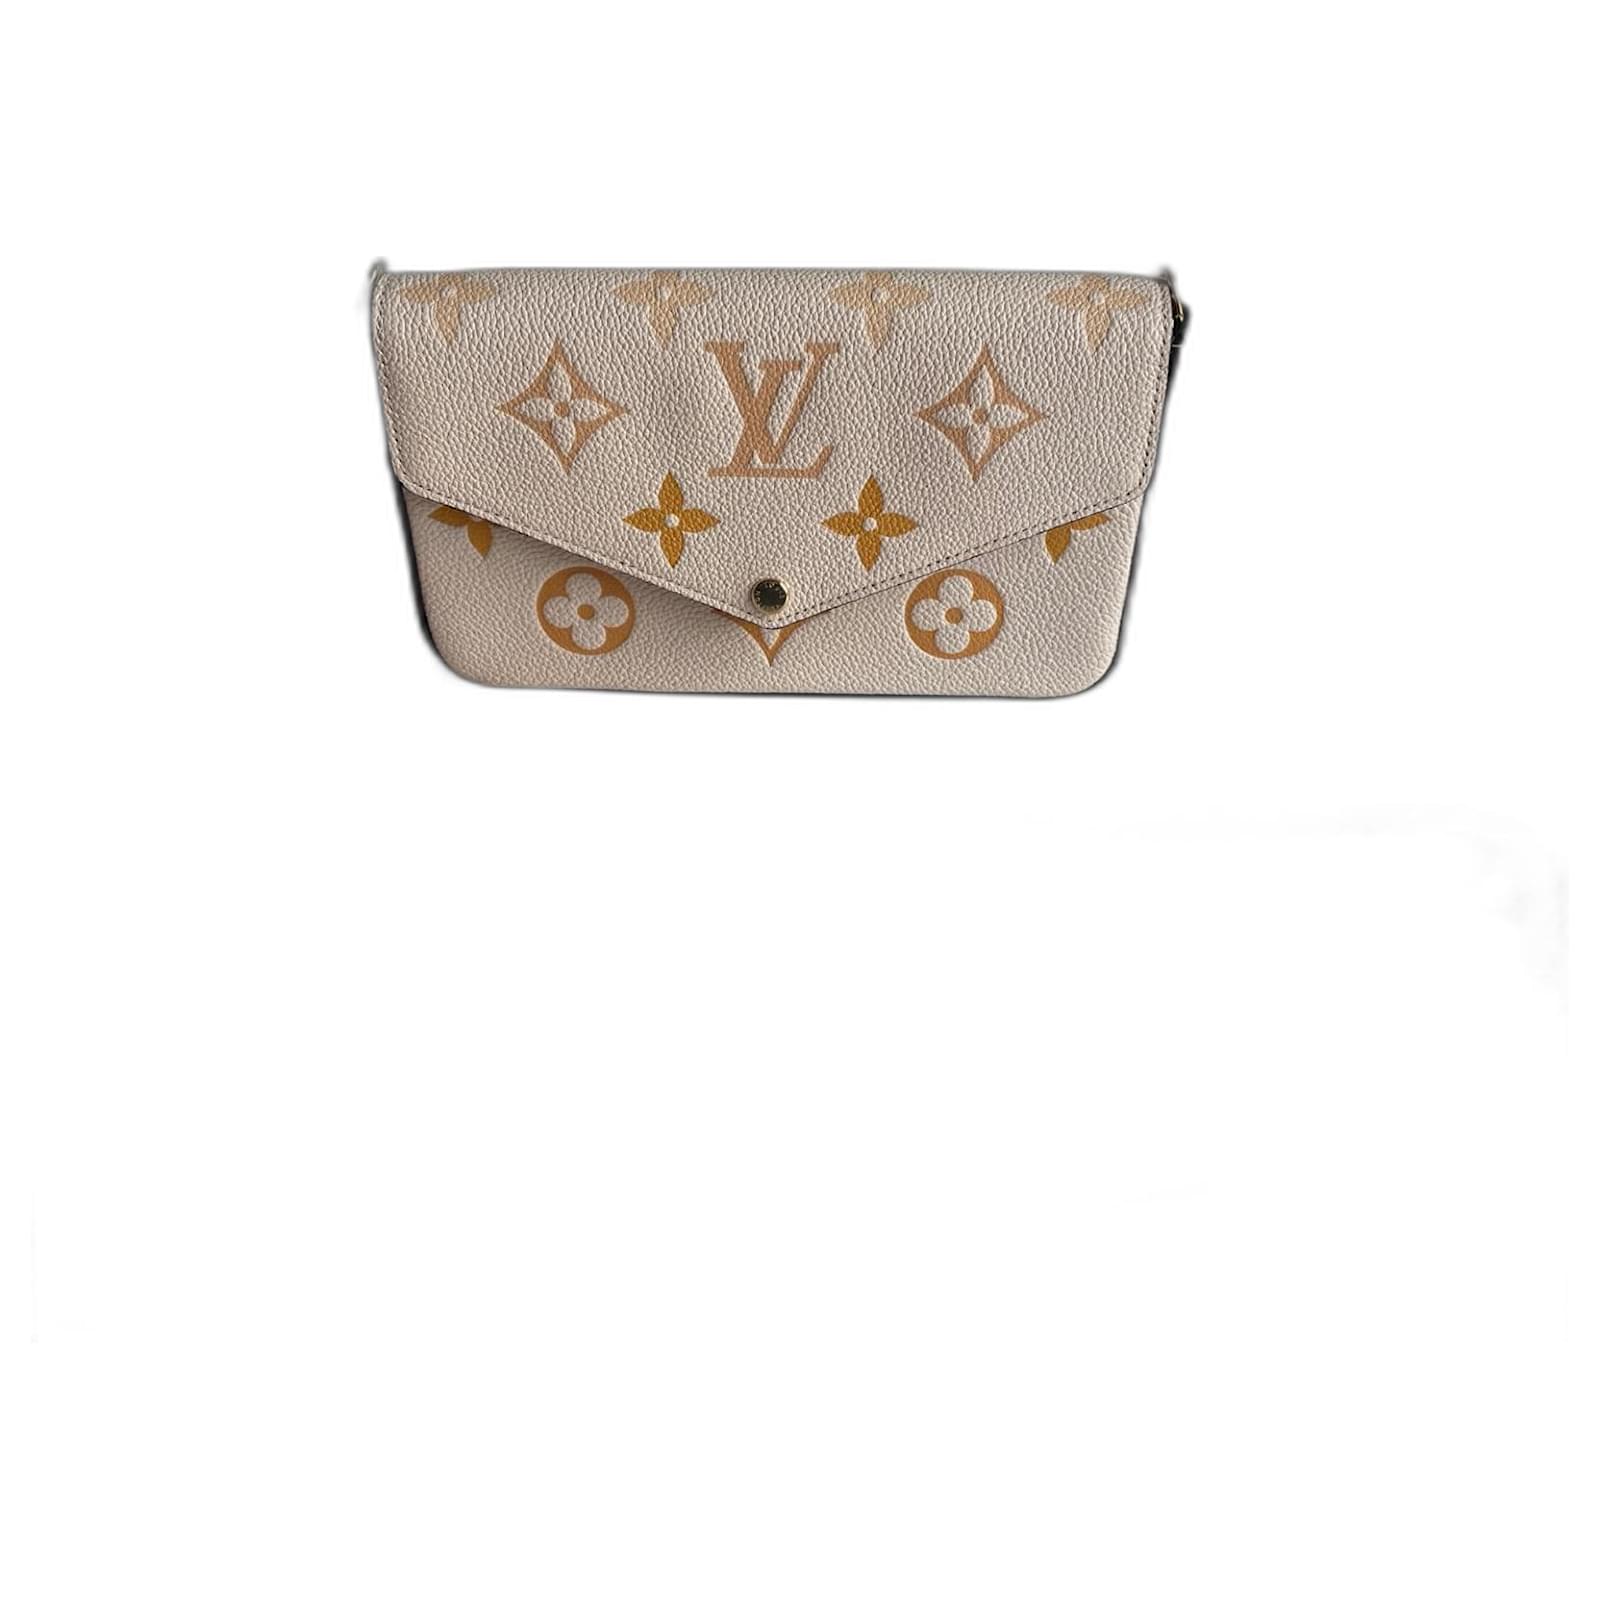 Genuine Louis Vuitton cream bag and wallet